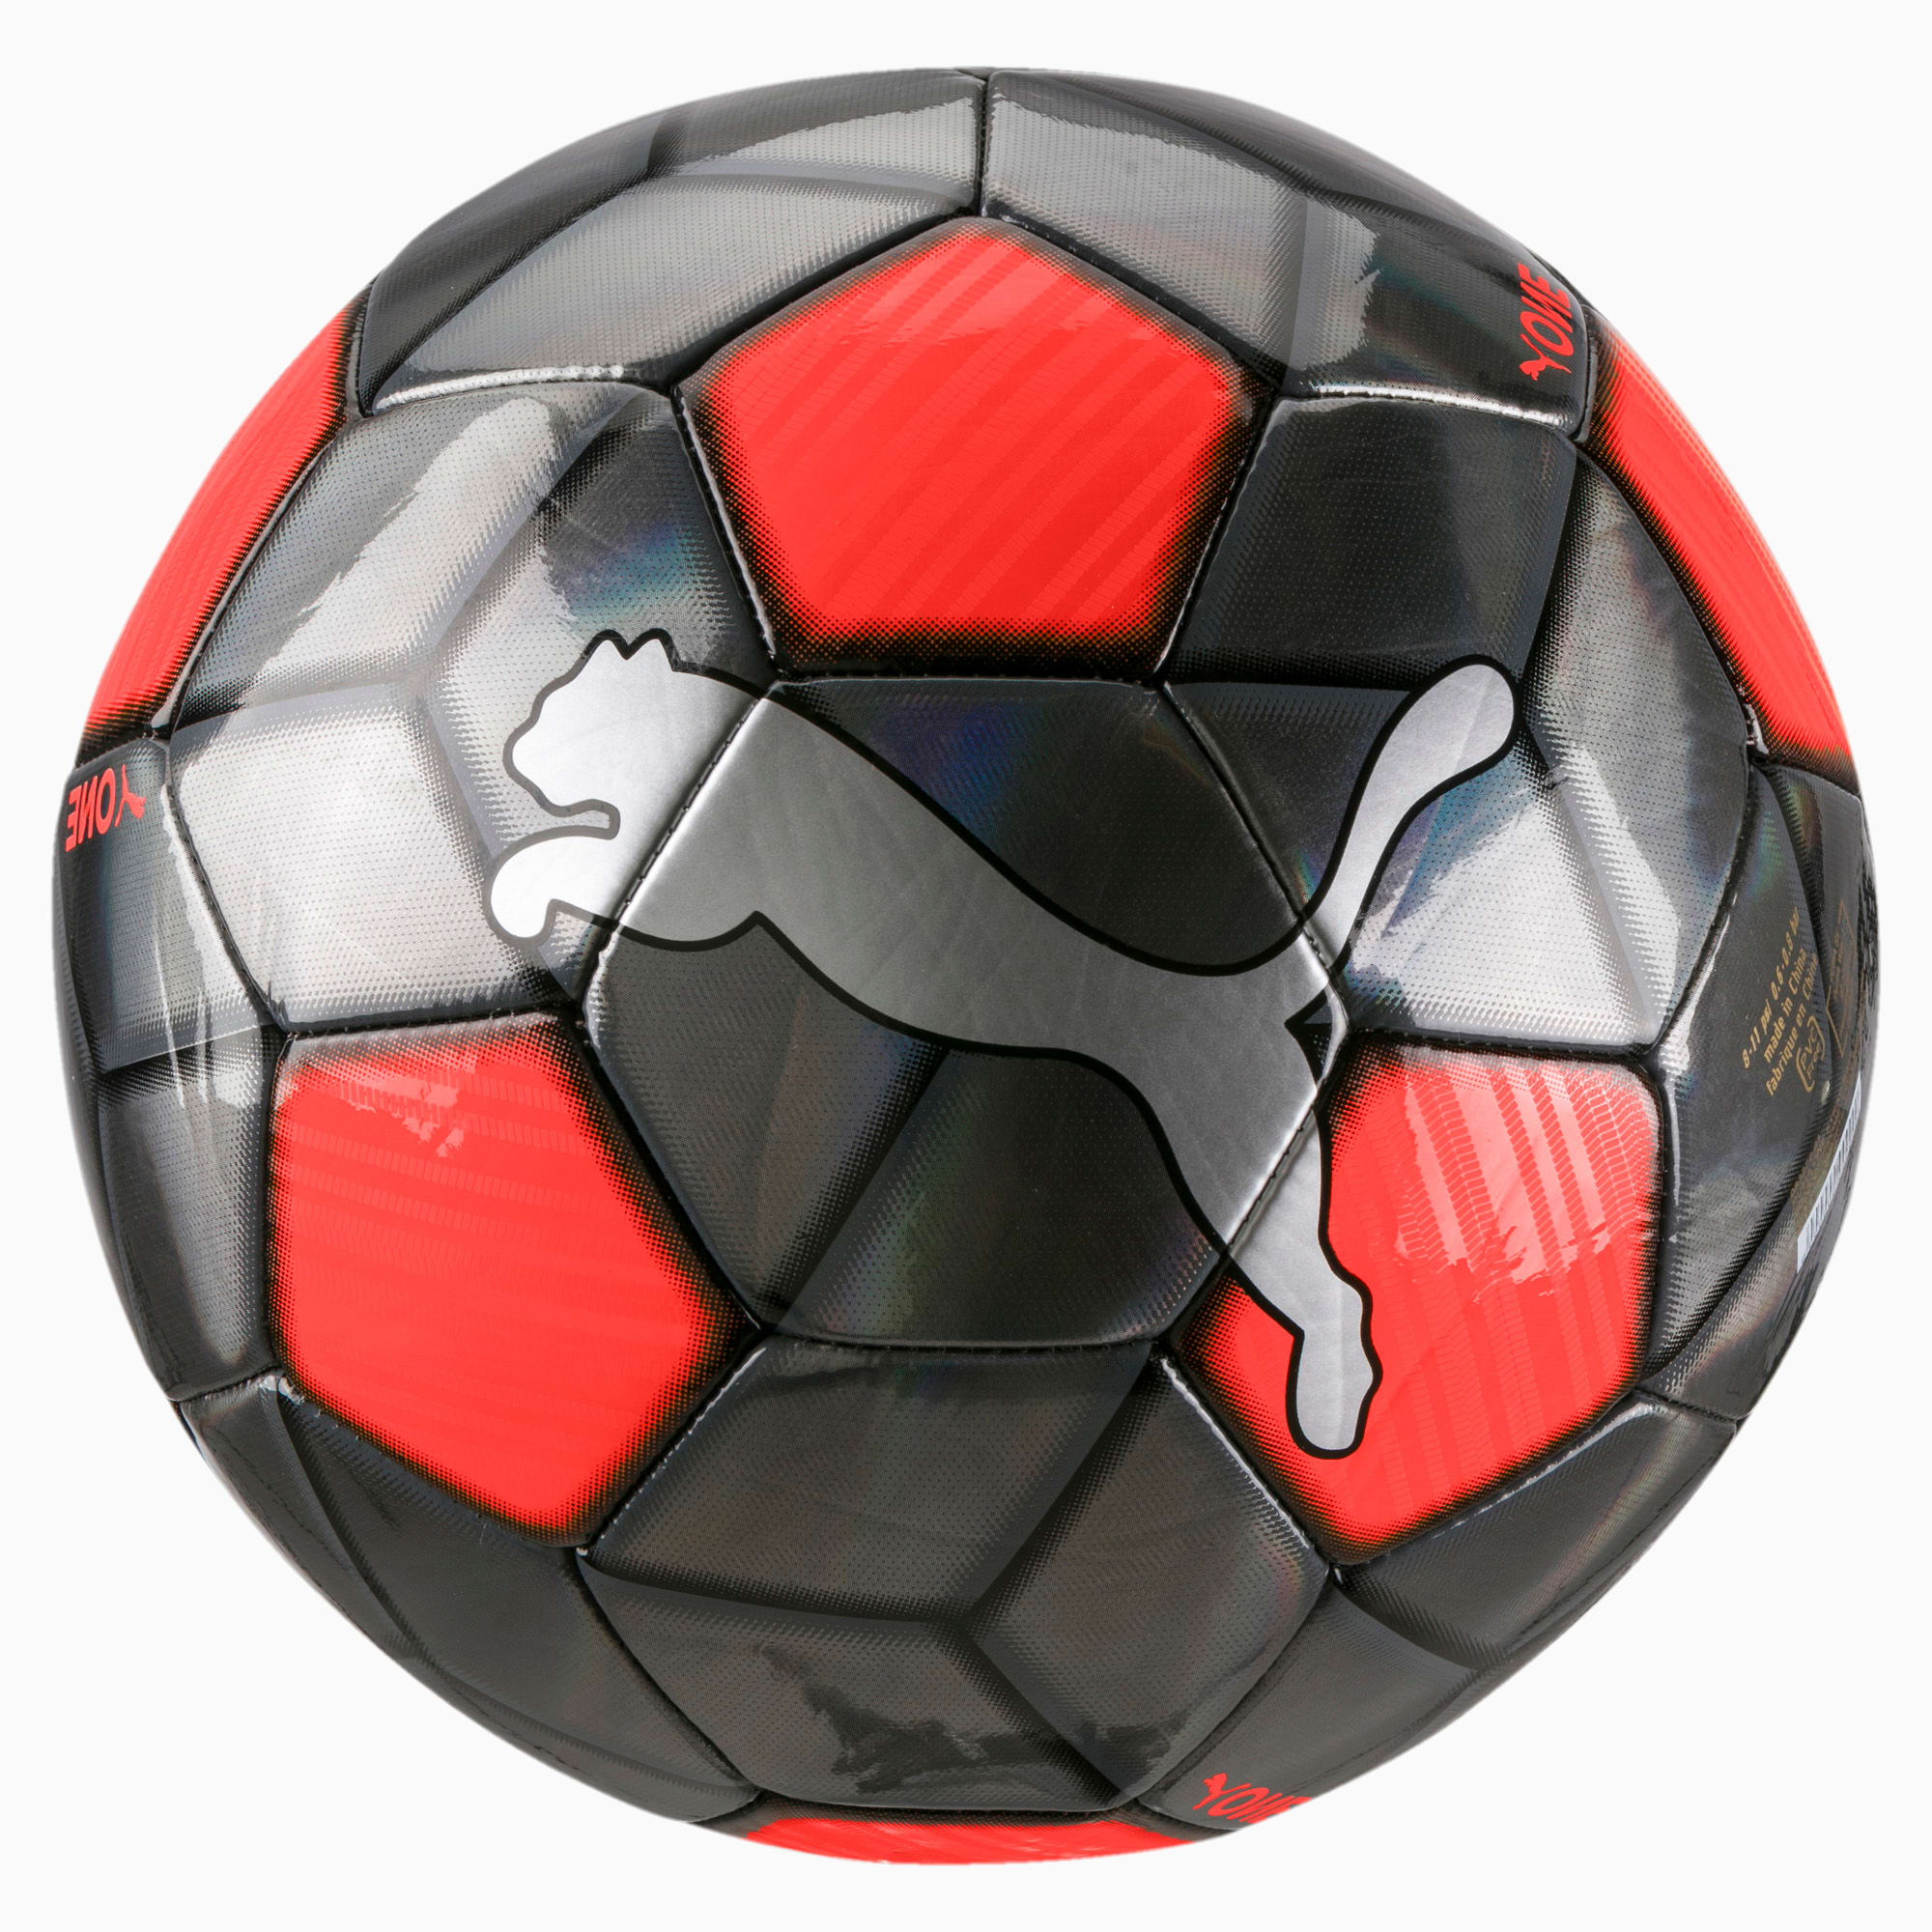 puma official soccer ball